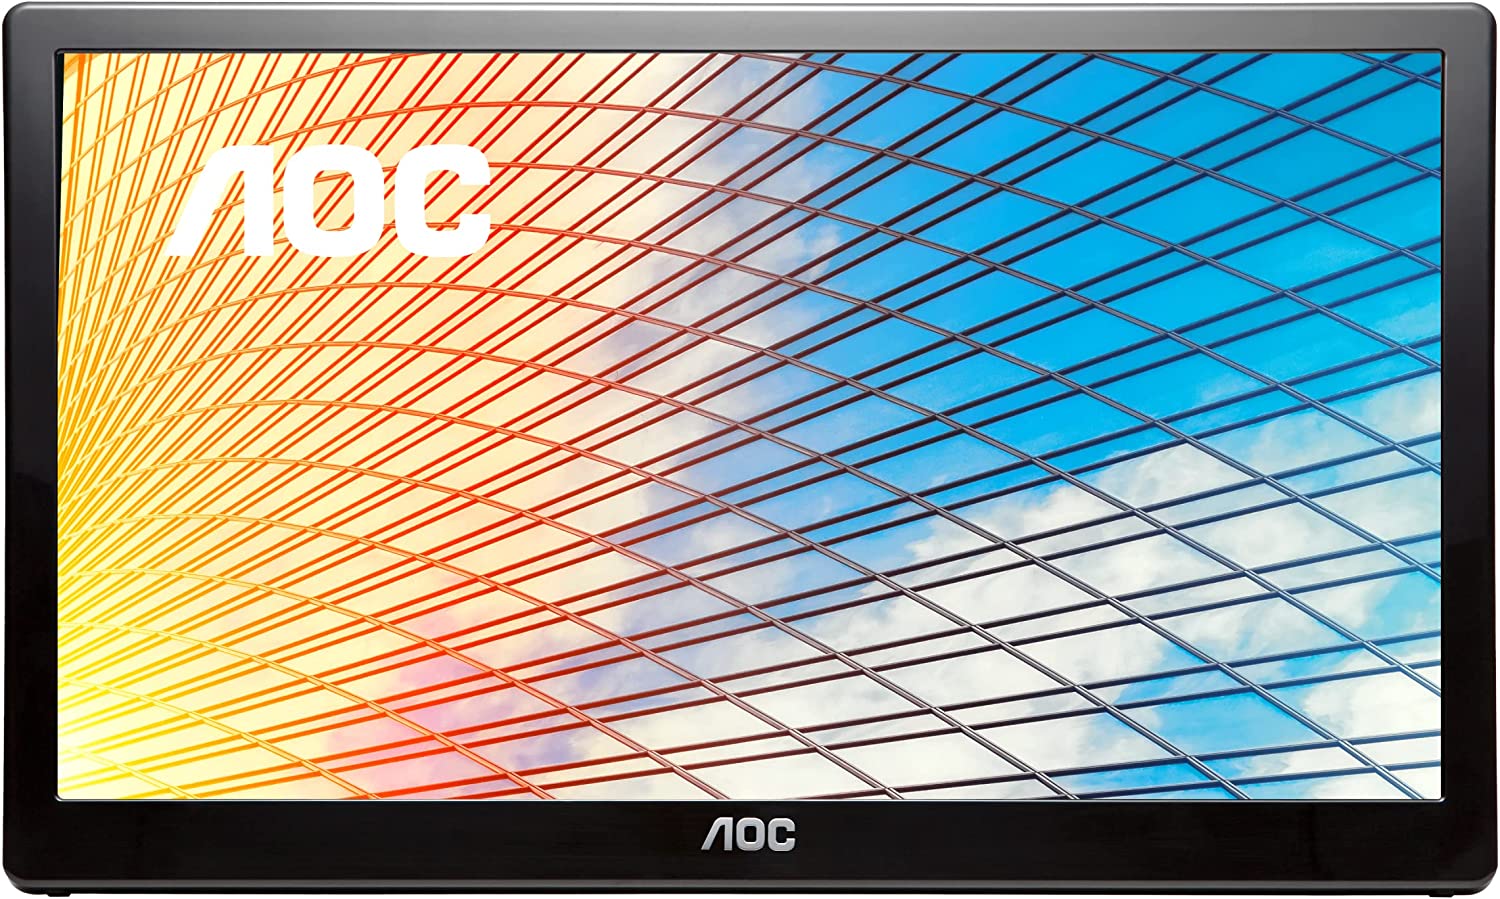 AOC E1659FWU-B 15.6" 1366 x 768 60Hz Ultra portable Monitor - Certified Refurbished